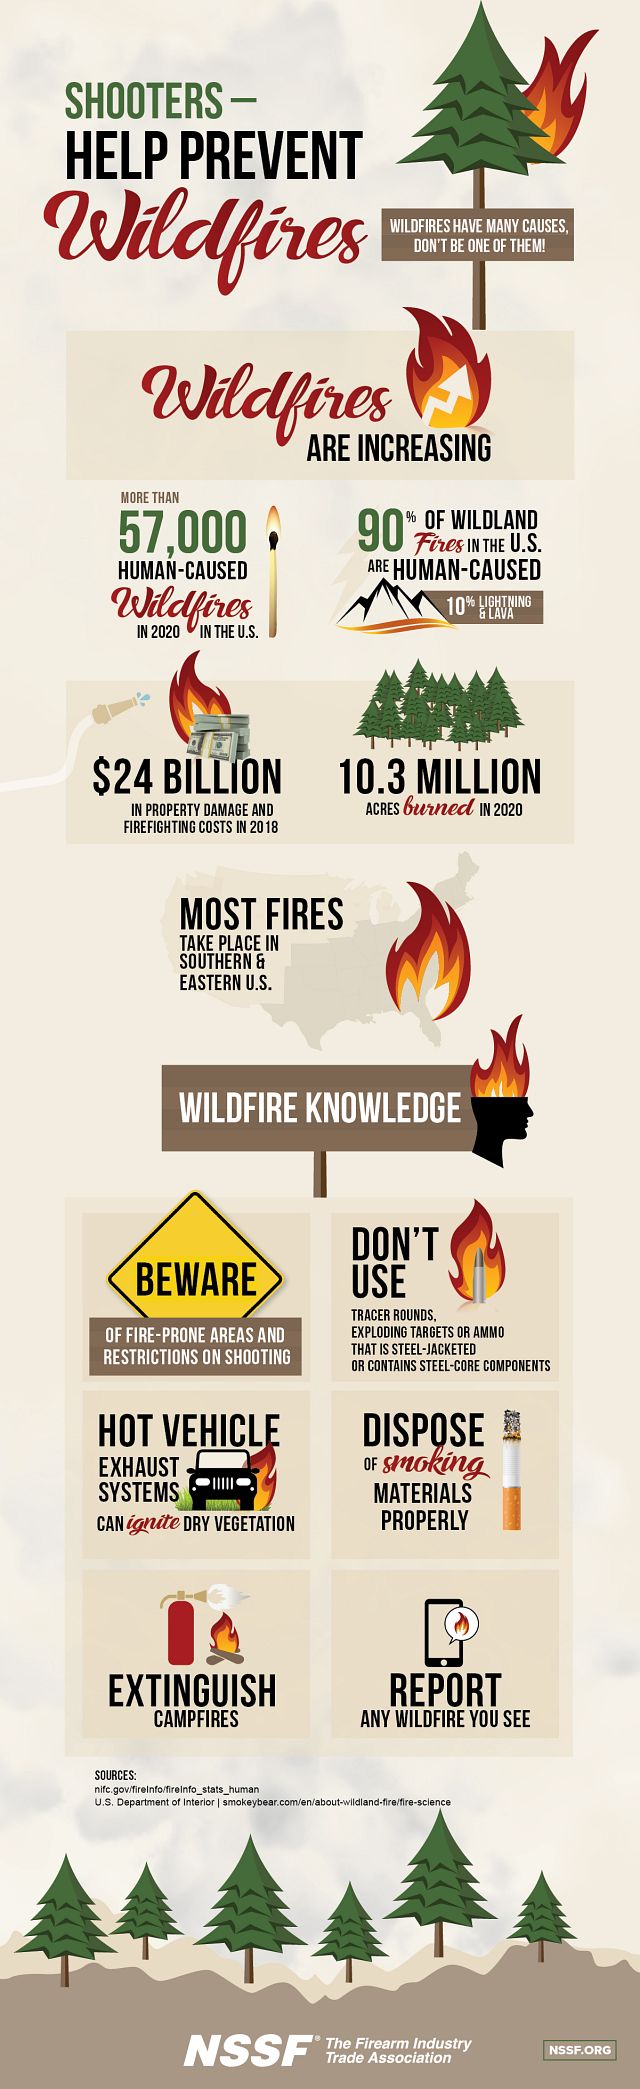 Wildfire-Infographic.jpeg